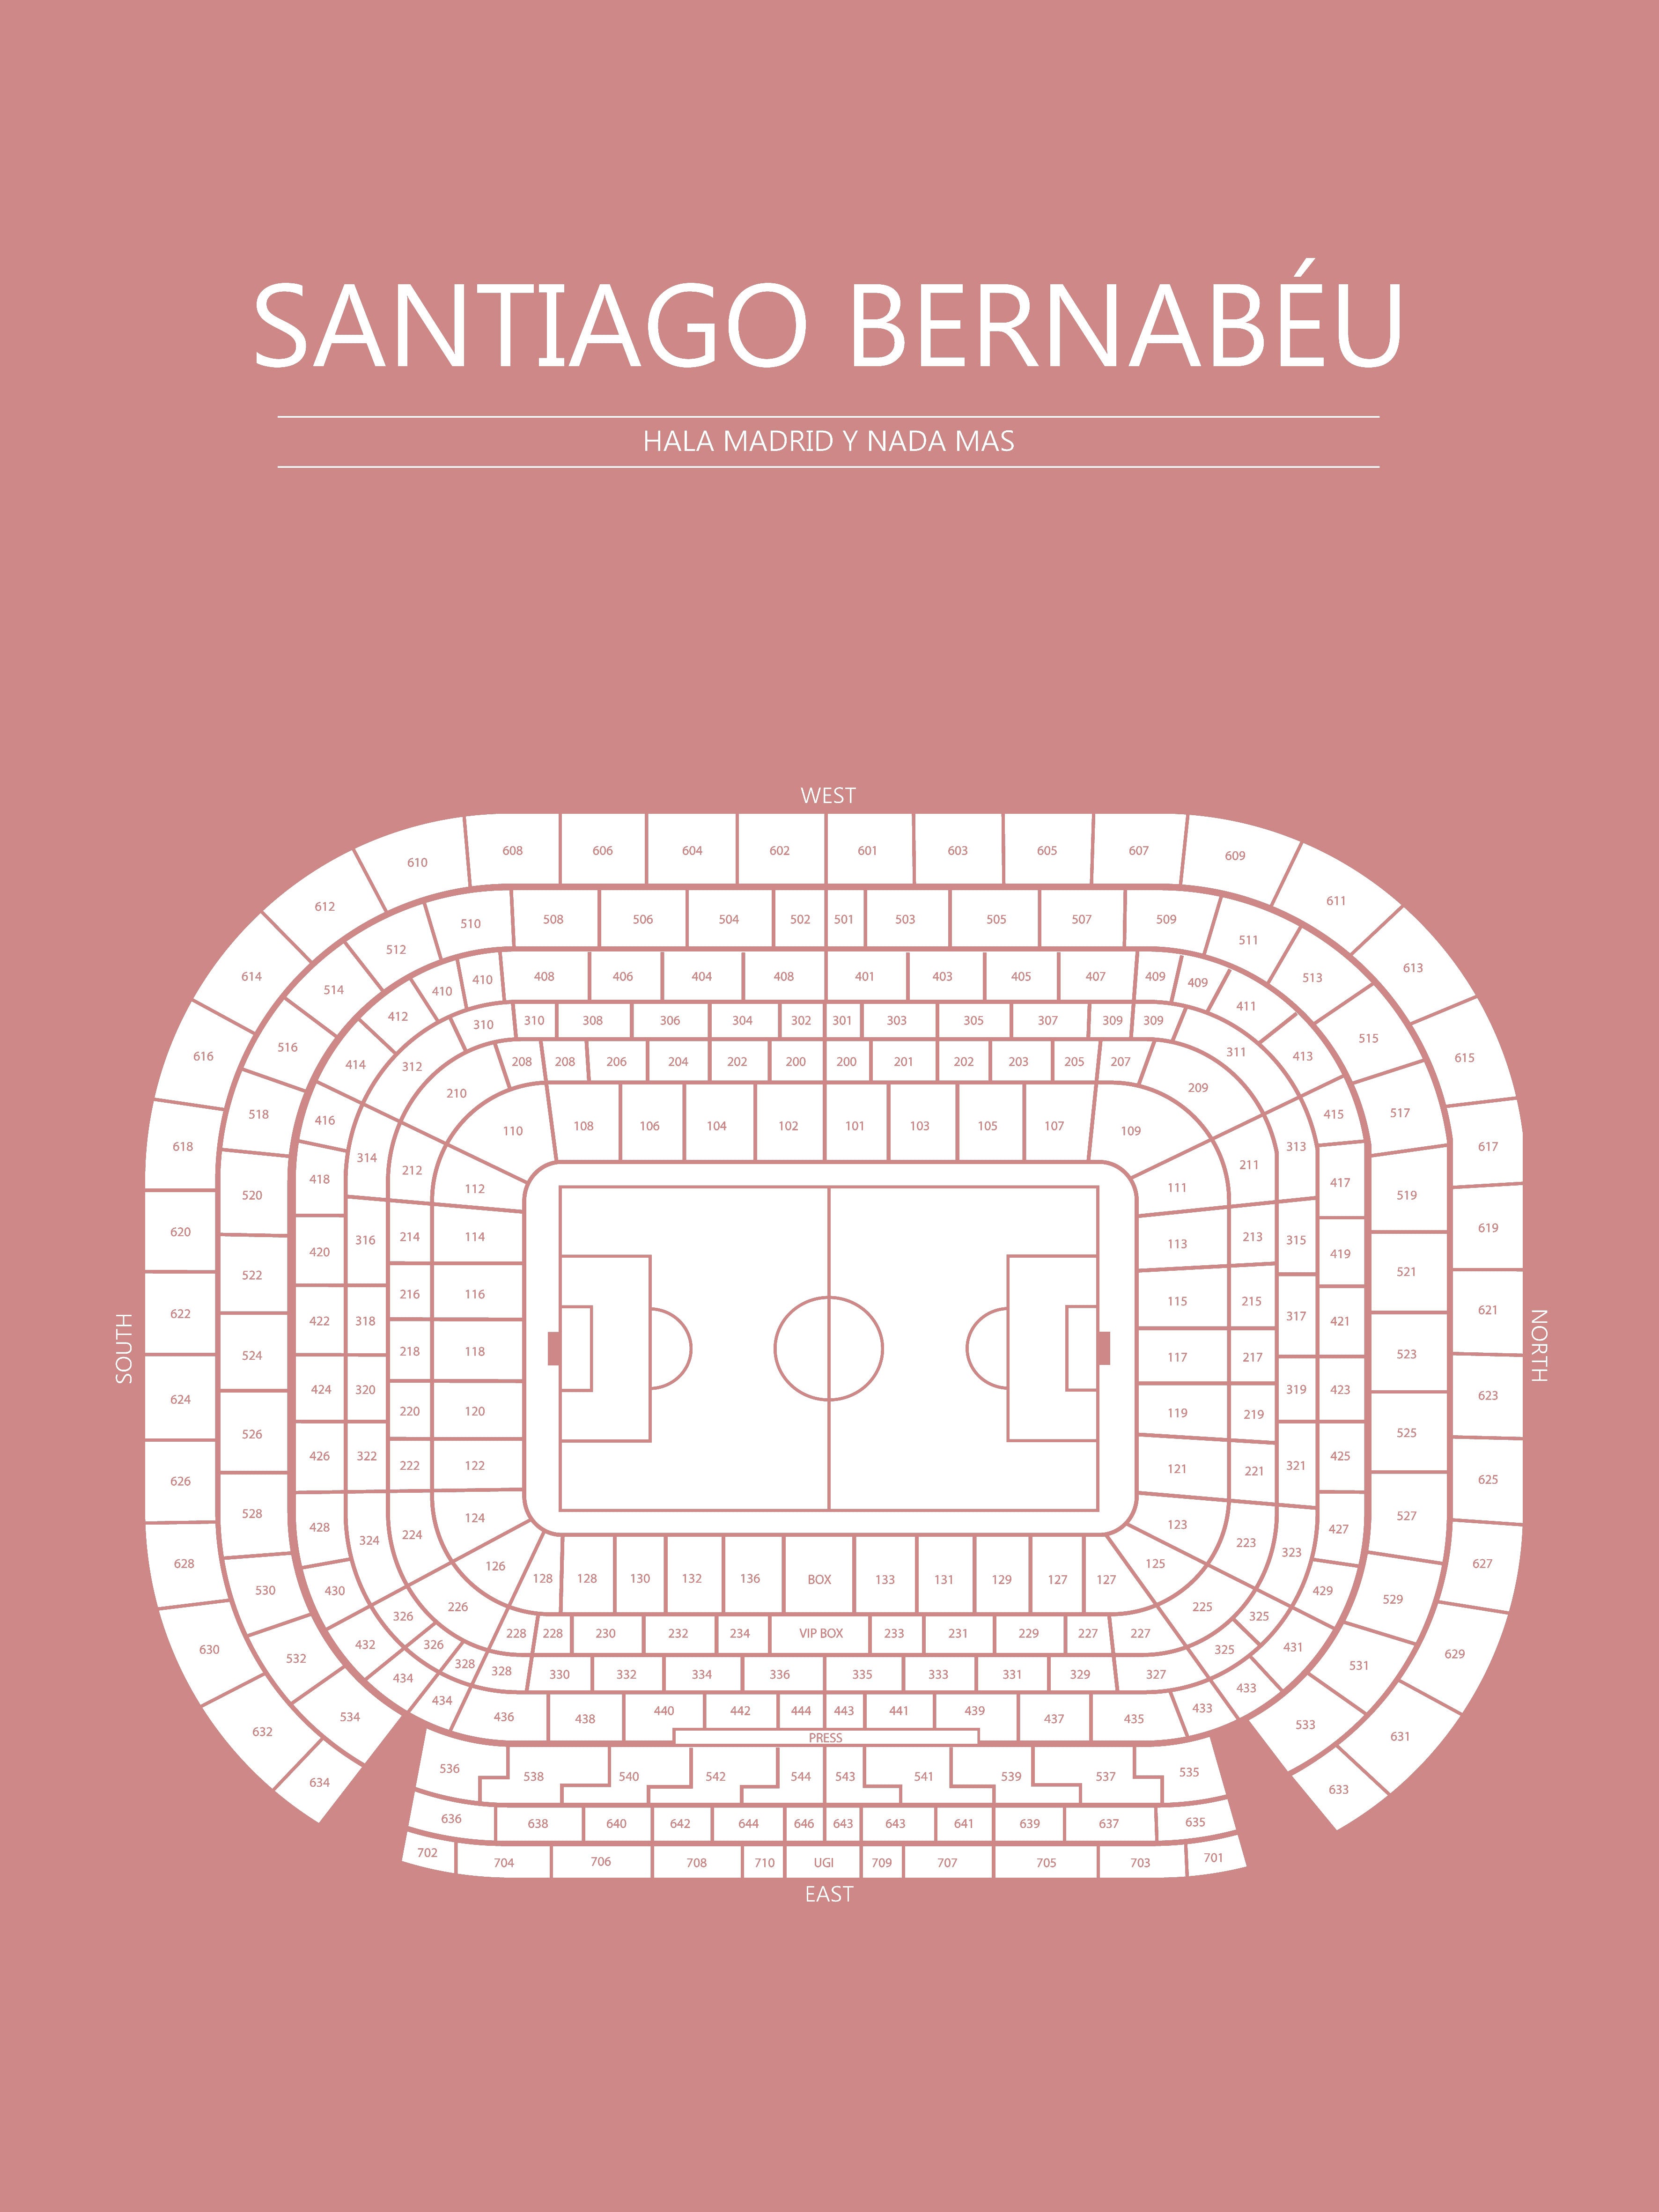 Fodbold plakat Real Madrid Santiago Bernabeu Blush